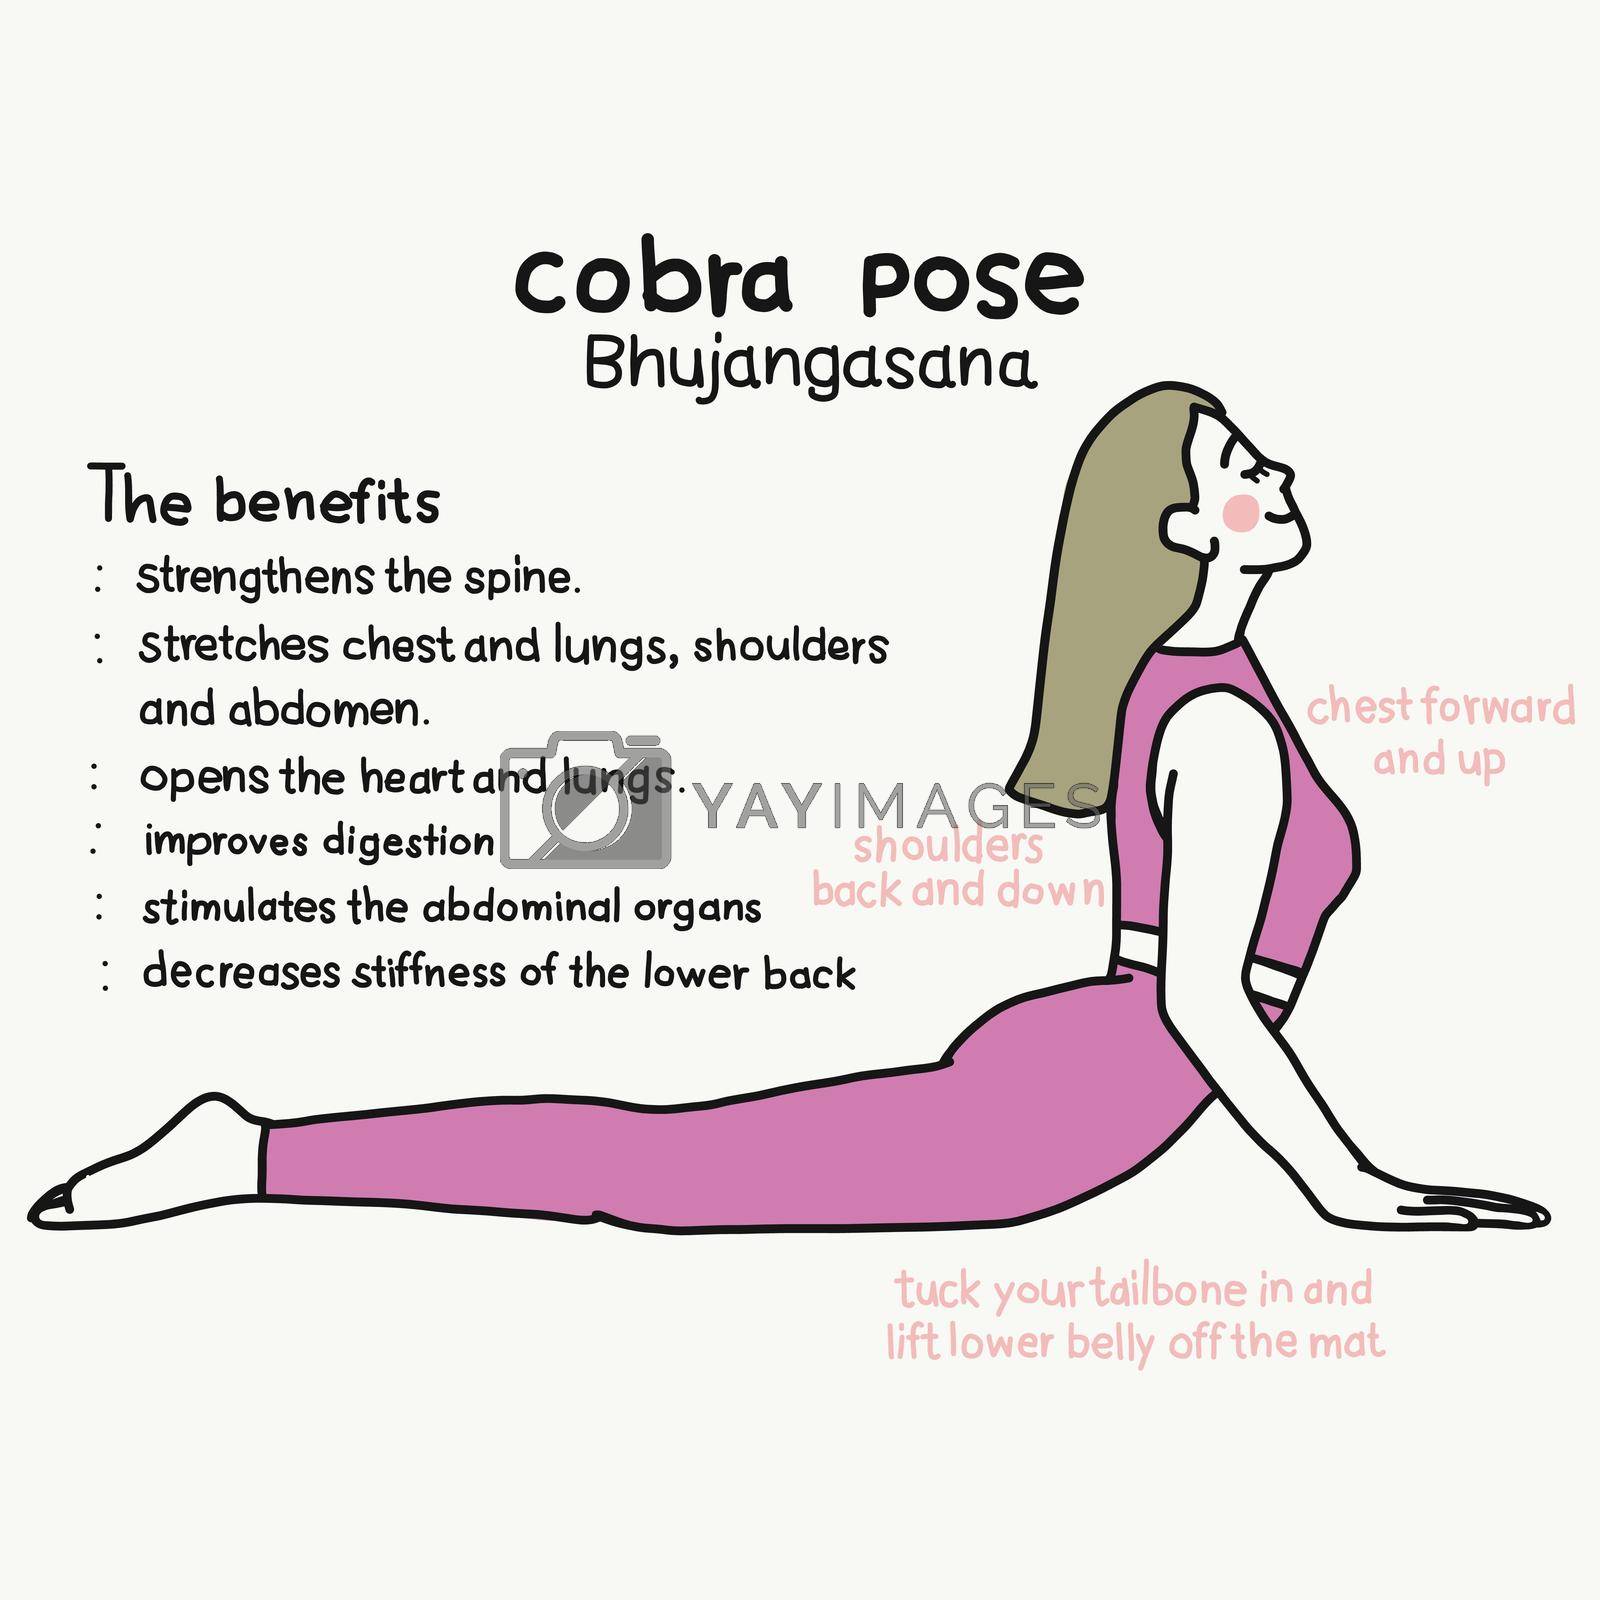 Cobra pose yoga pose and benefits cartoon vector illustration